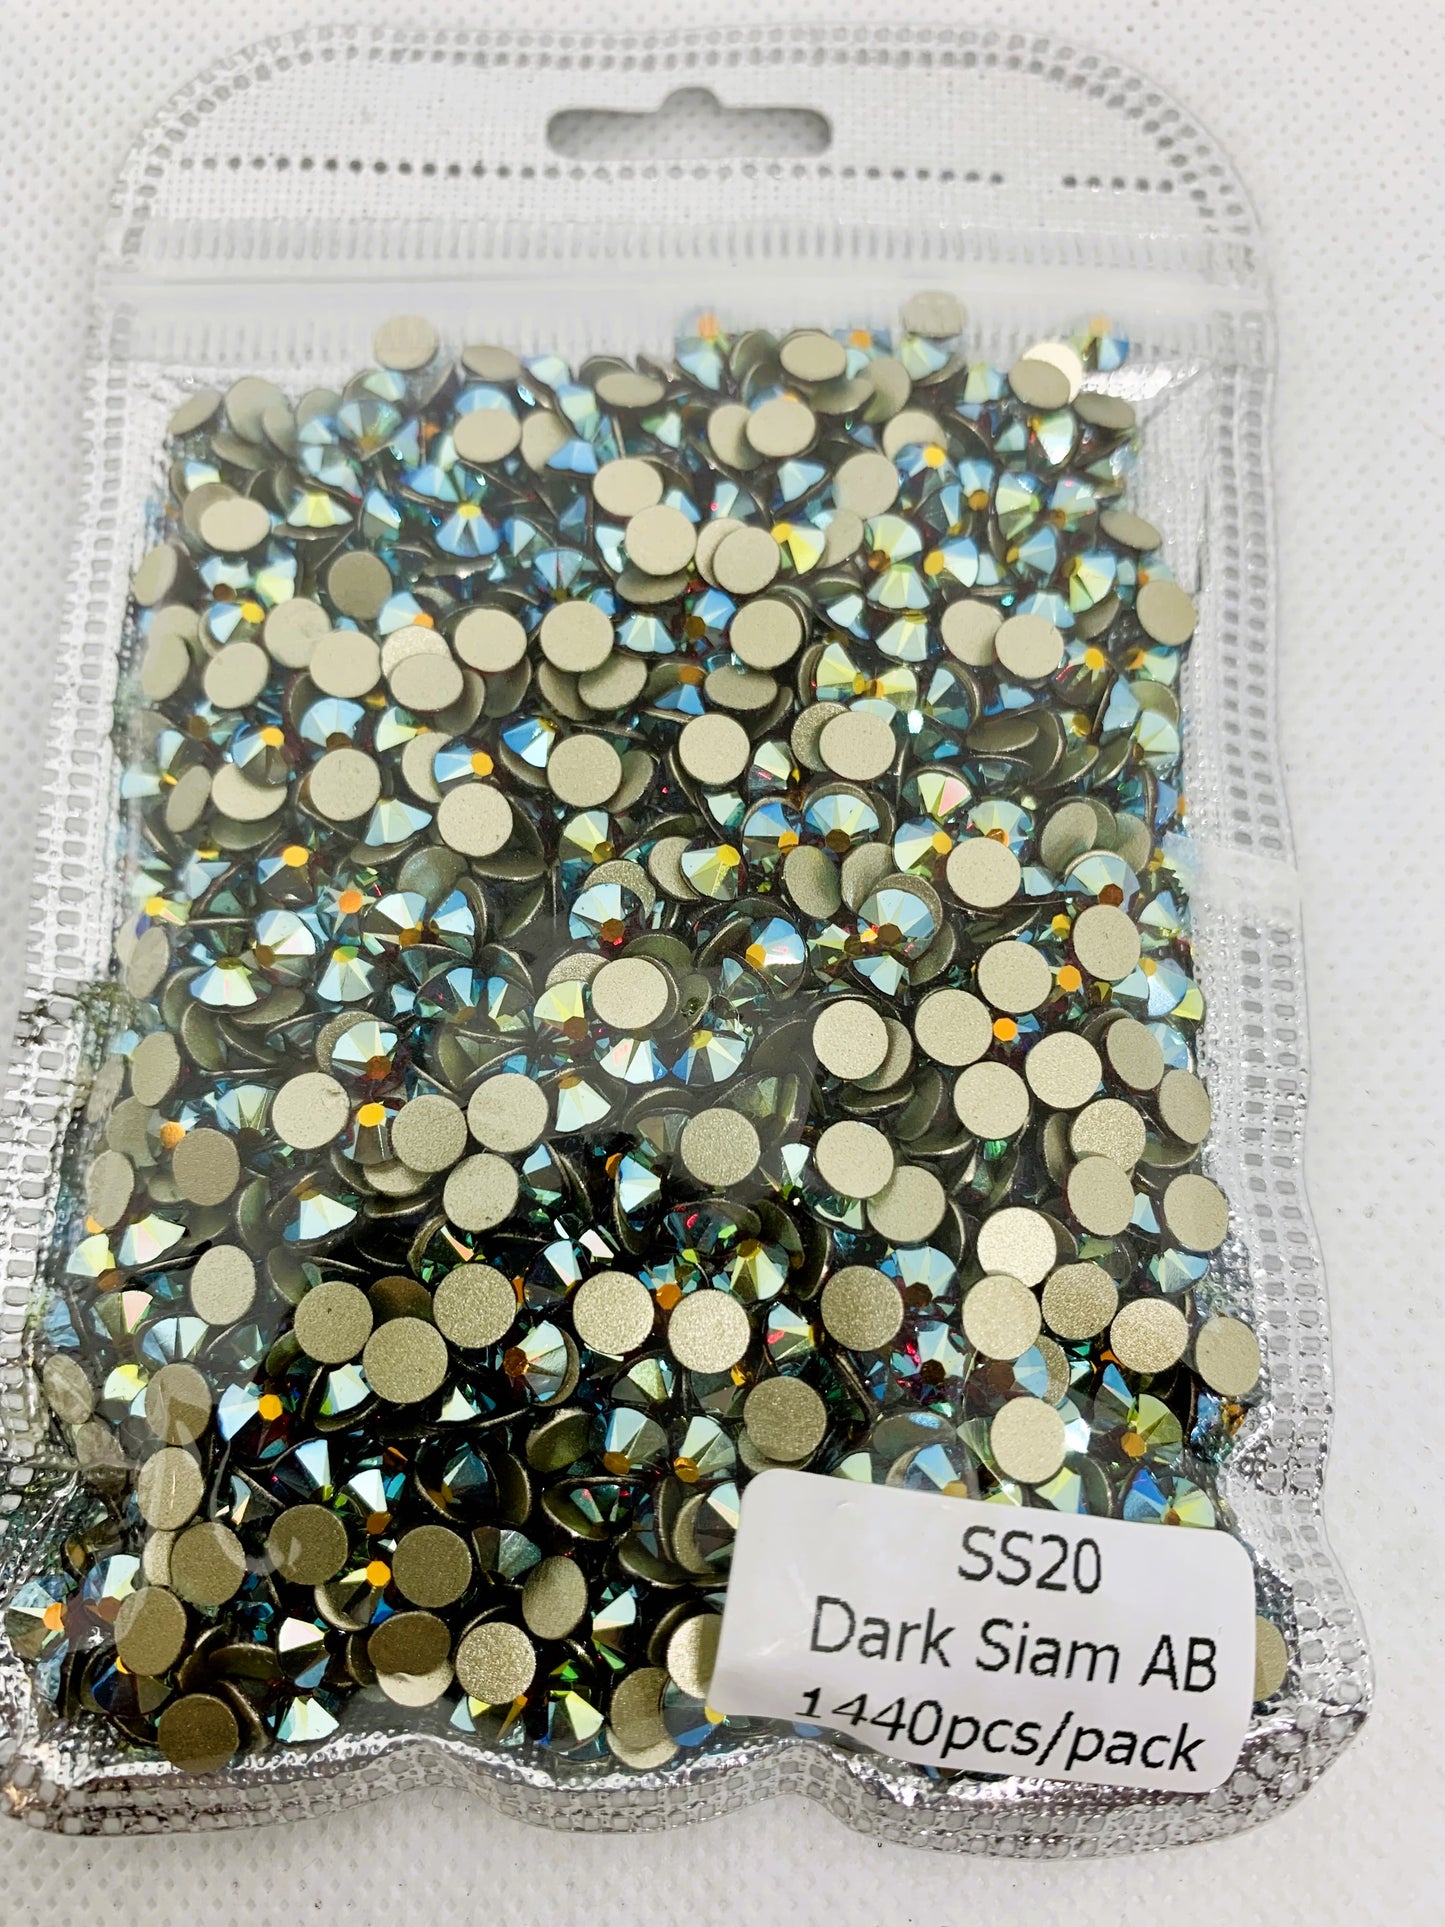 Dark Siam AB - Top Quality